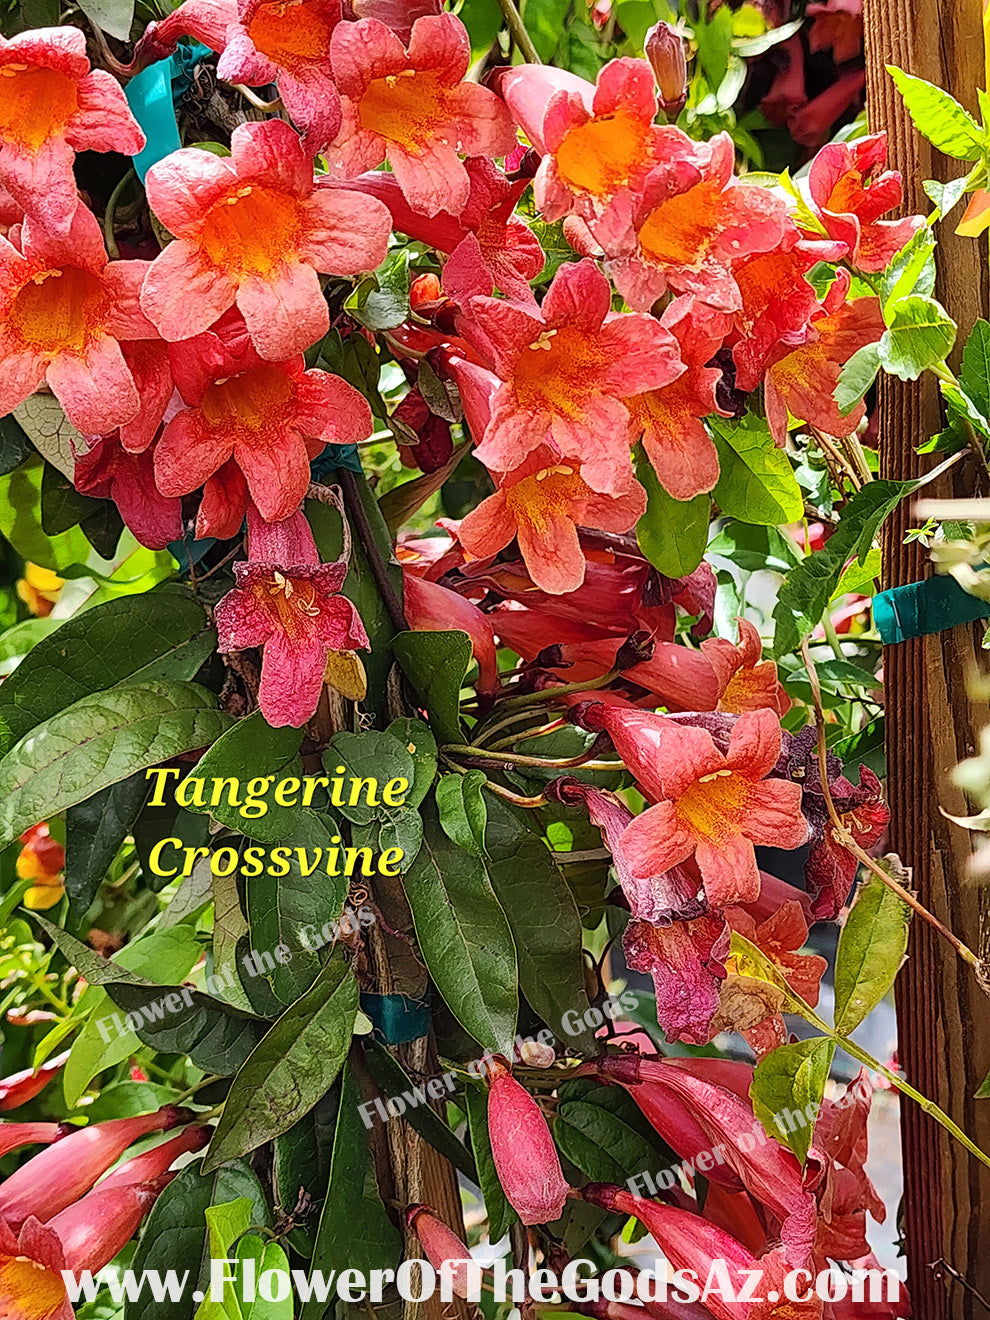 Vines - Tangerine crossvine